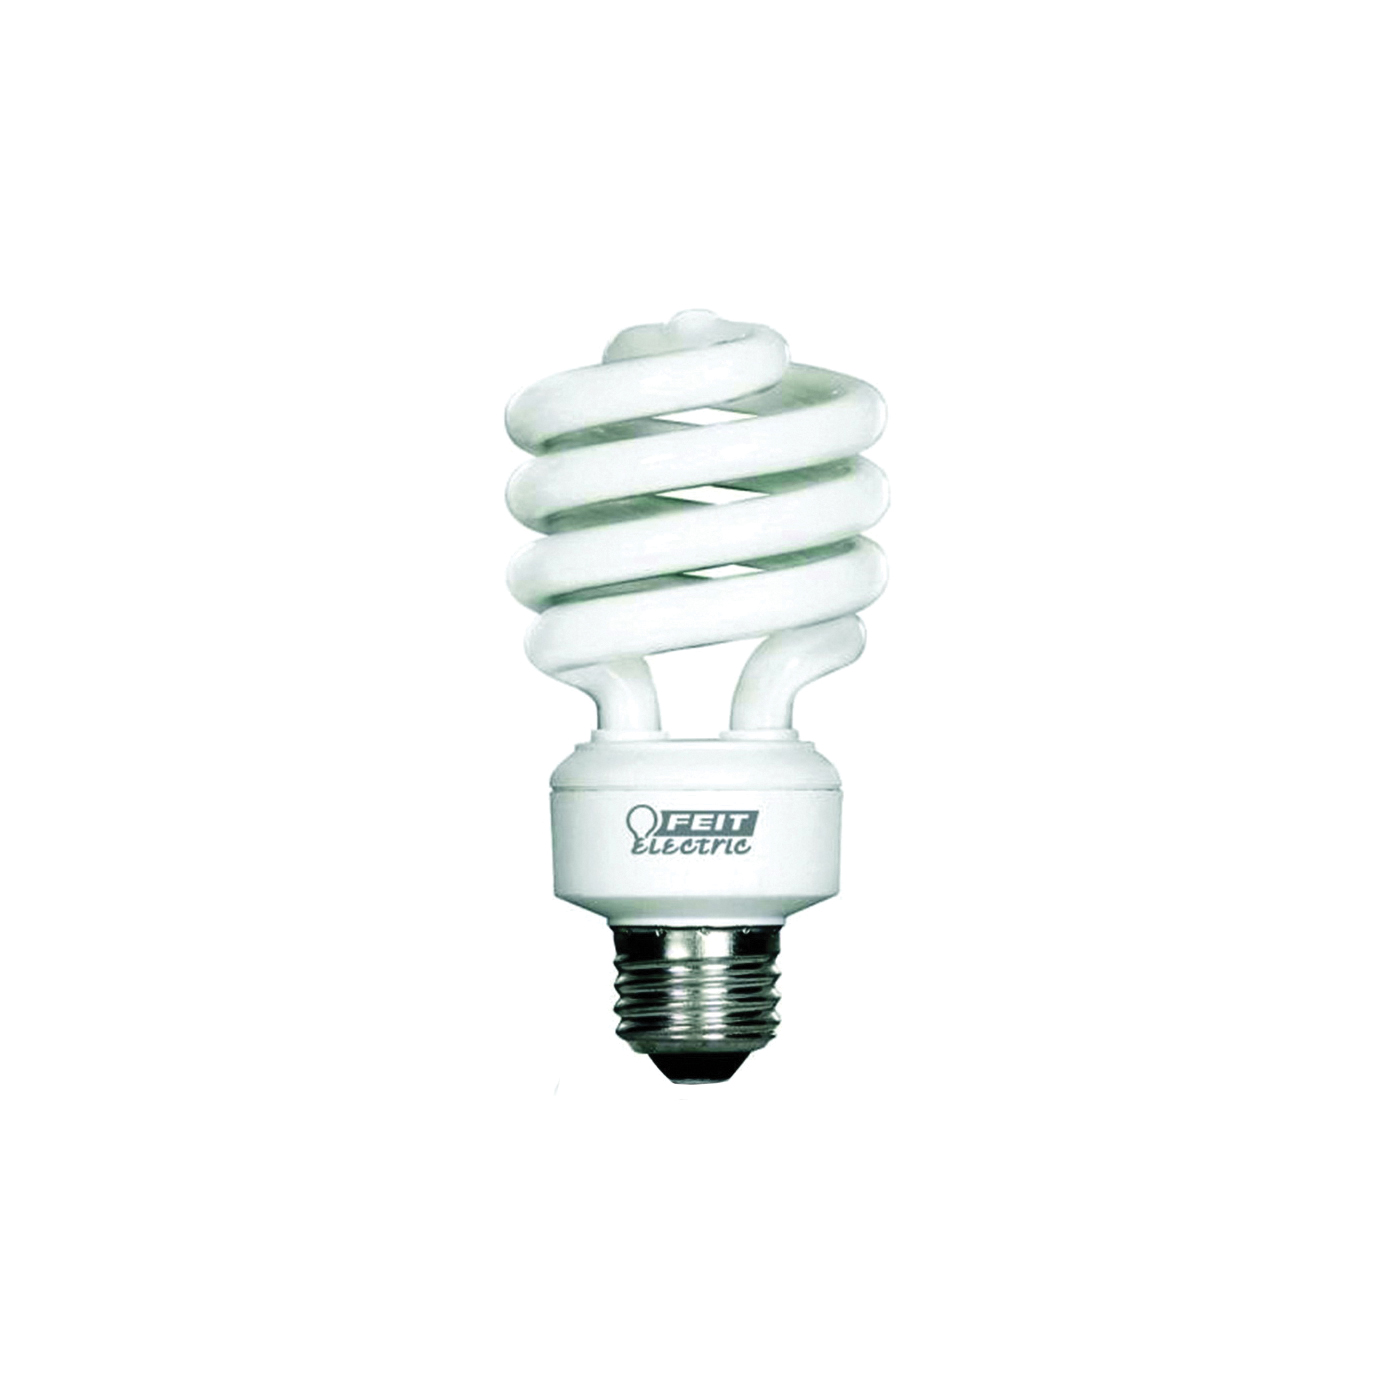 BPESL23TM Compact Fluorescent Lamp, 23 W, Spiral Lamp, Medium E26 Lamp Base, 1600 Lumens, Soft White Light